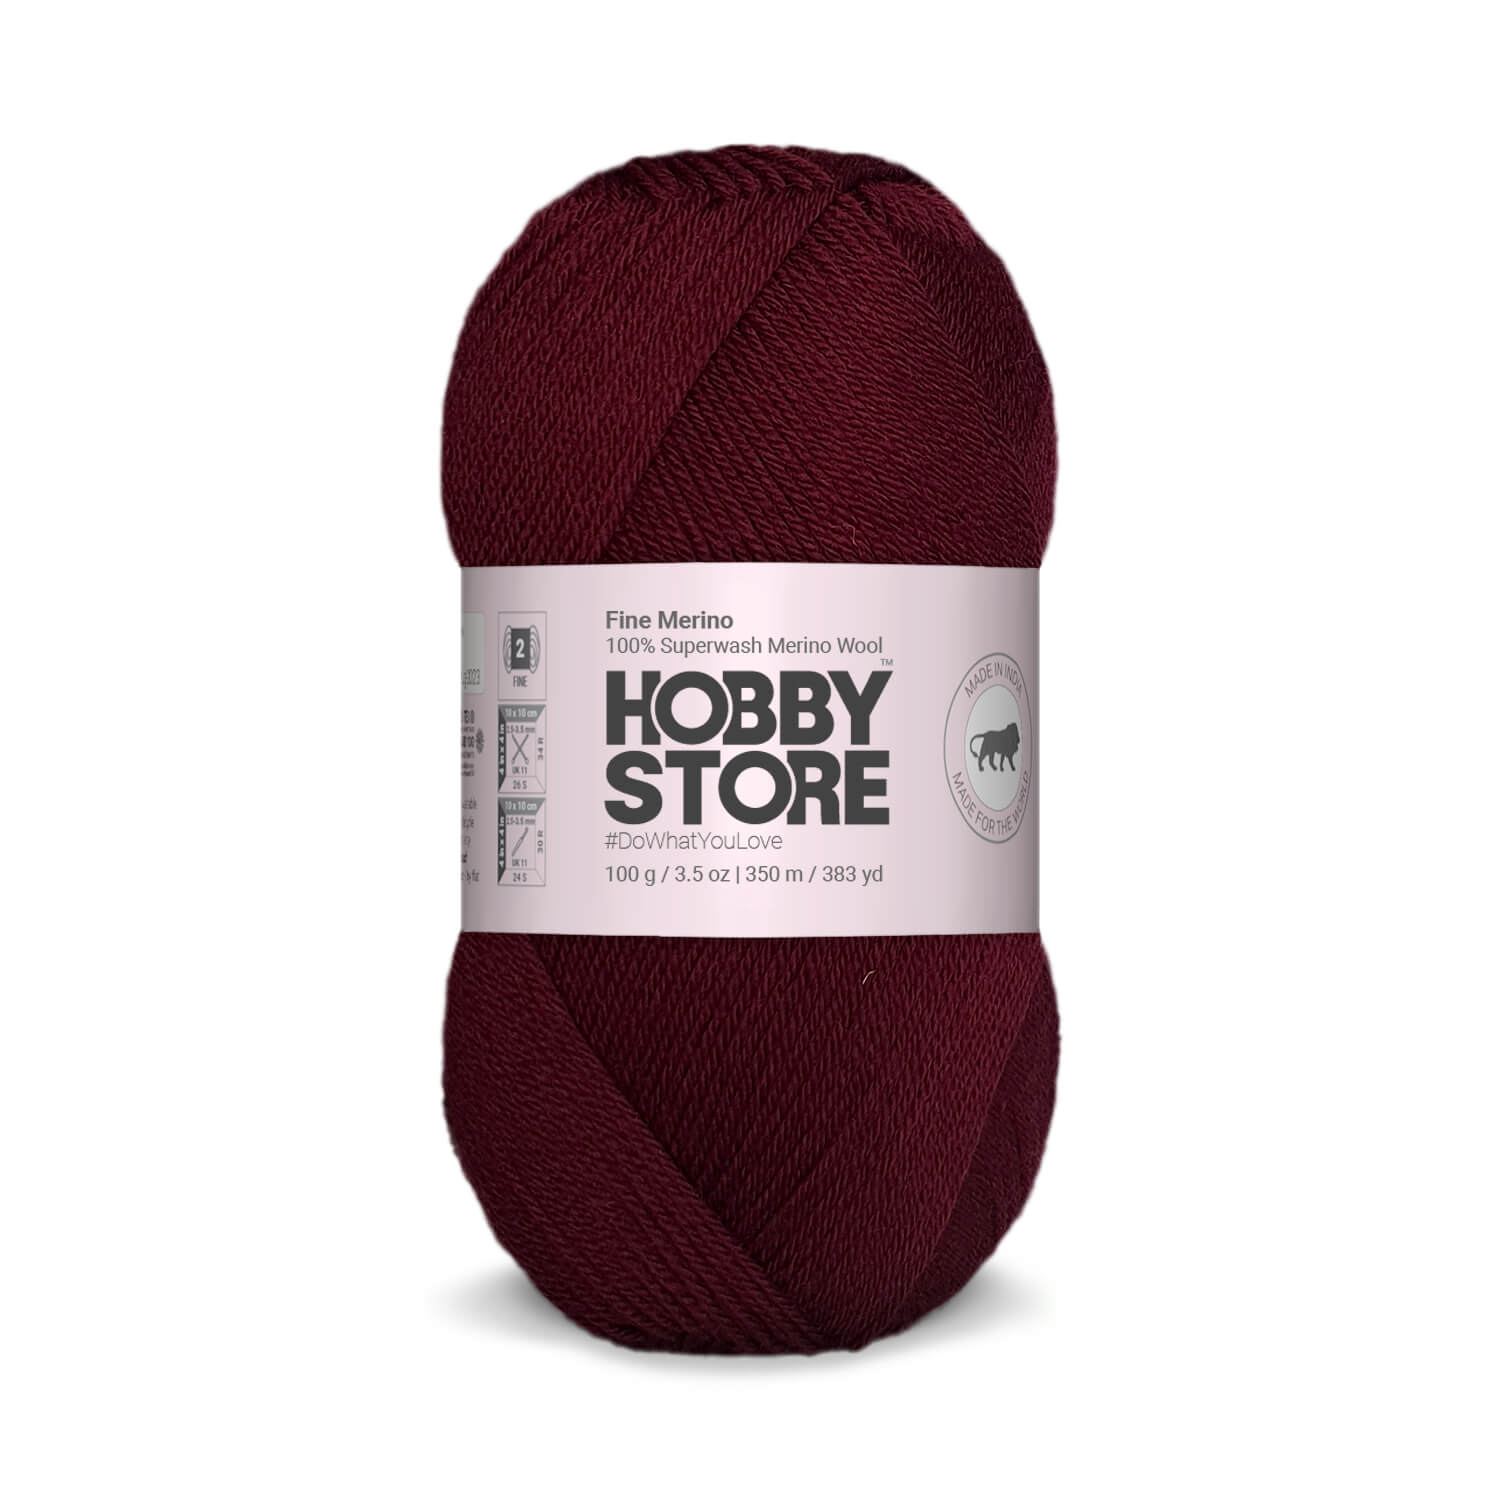 Fine Merino Wool by Hobby Store - Maroon FM009